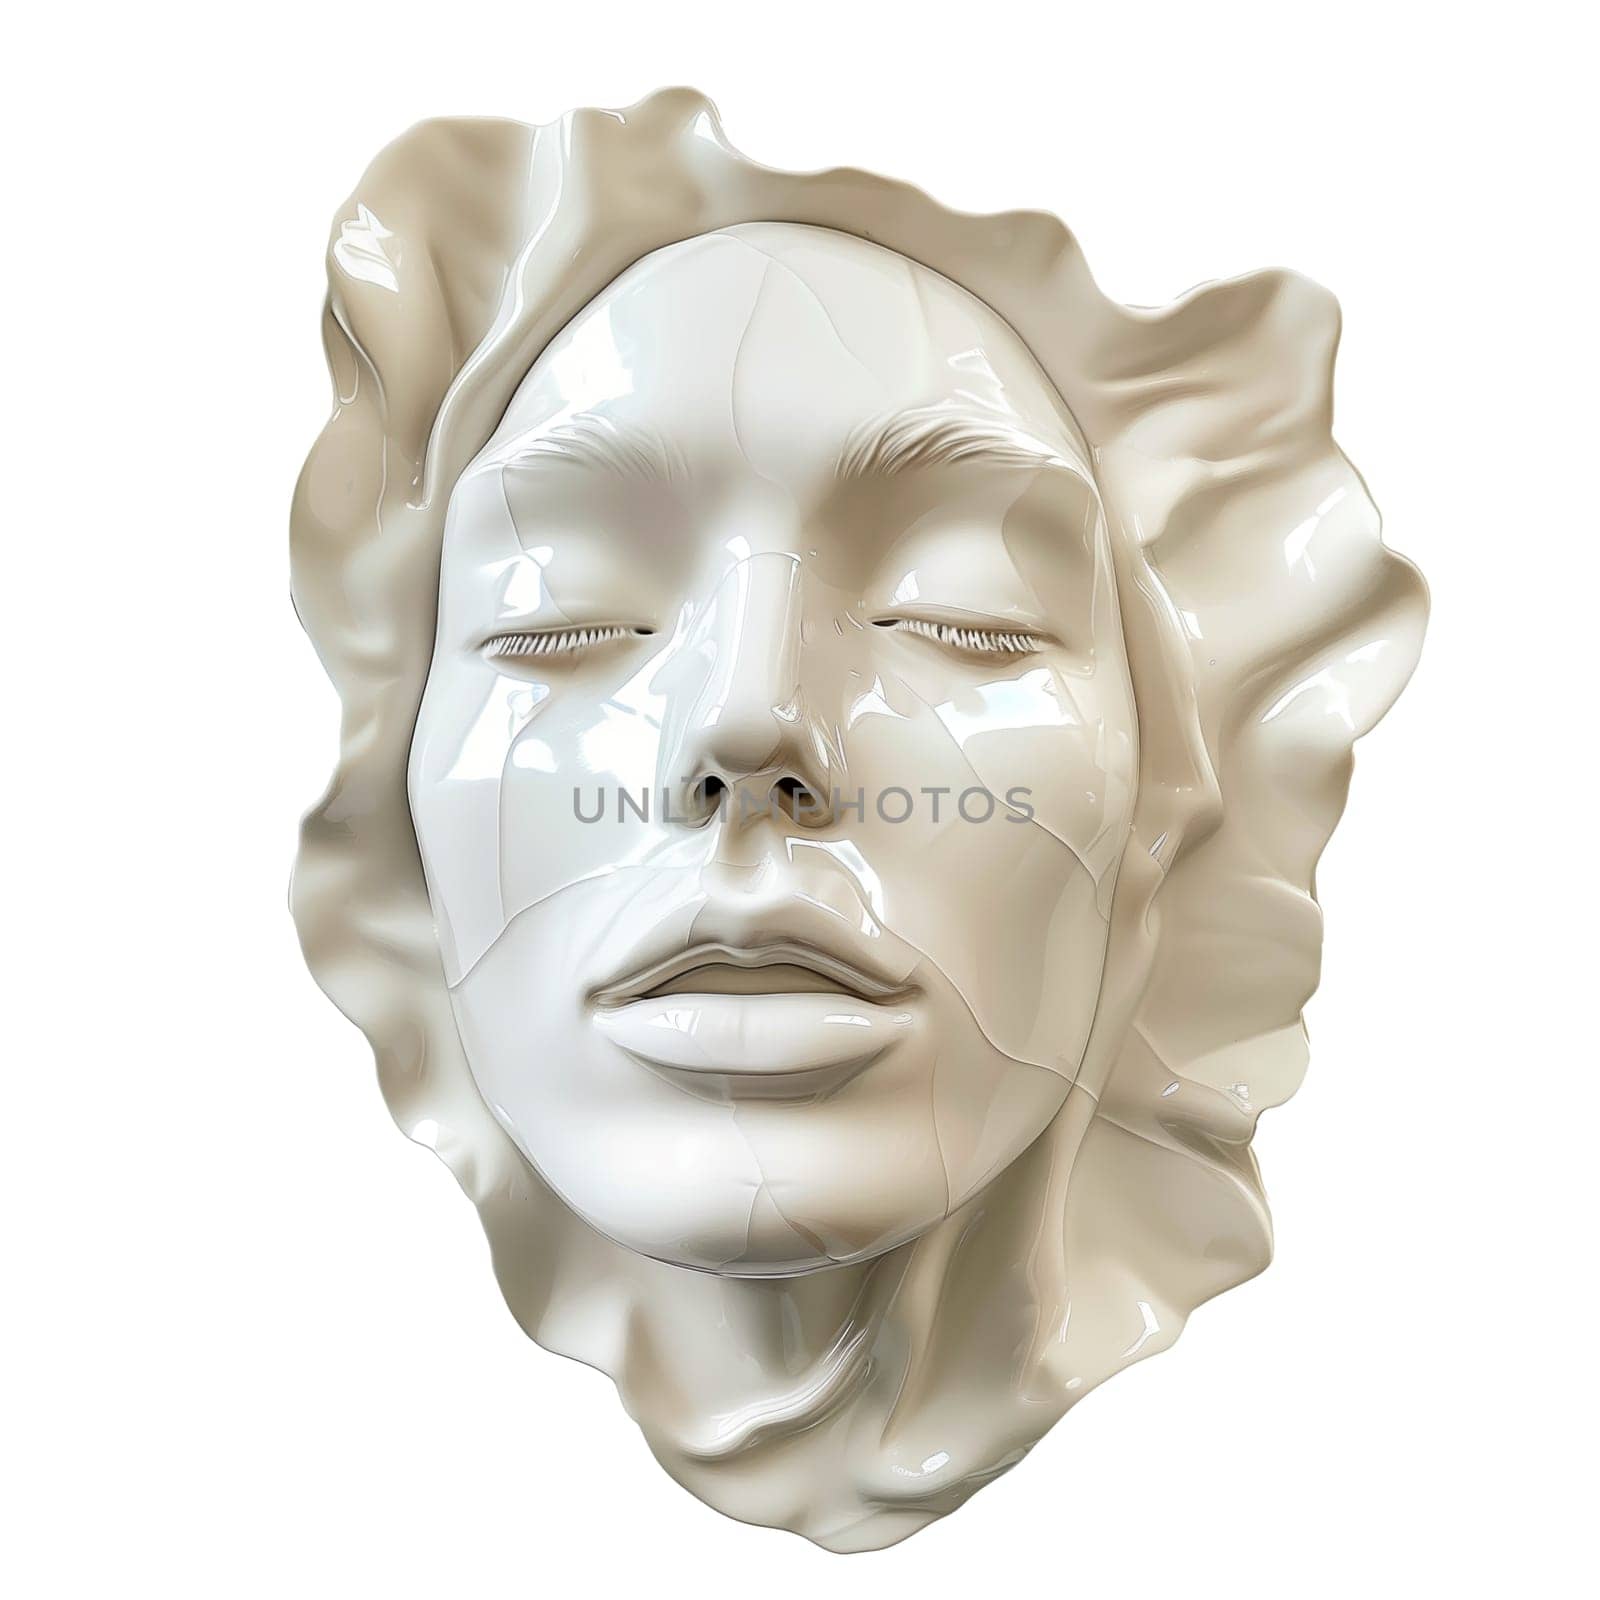 Woman face ceramic statue cut out element by Dustick